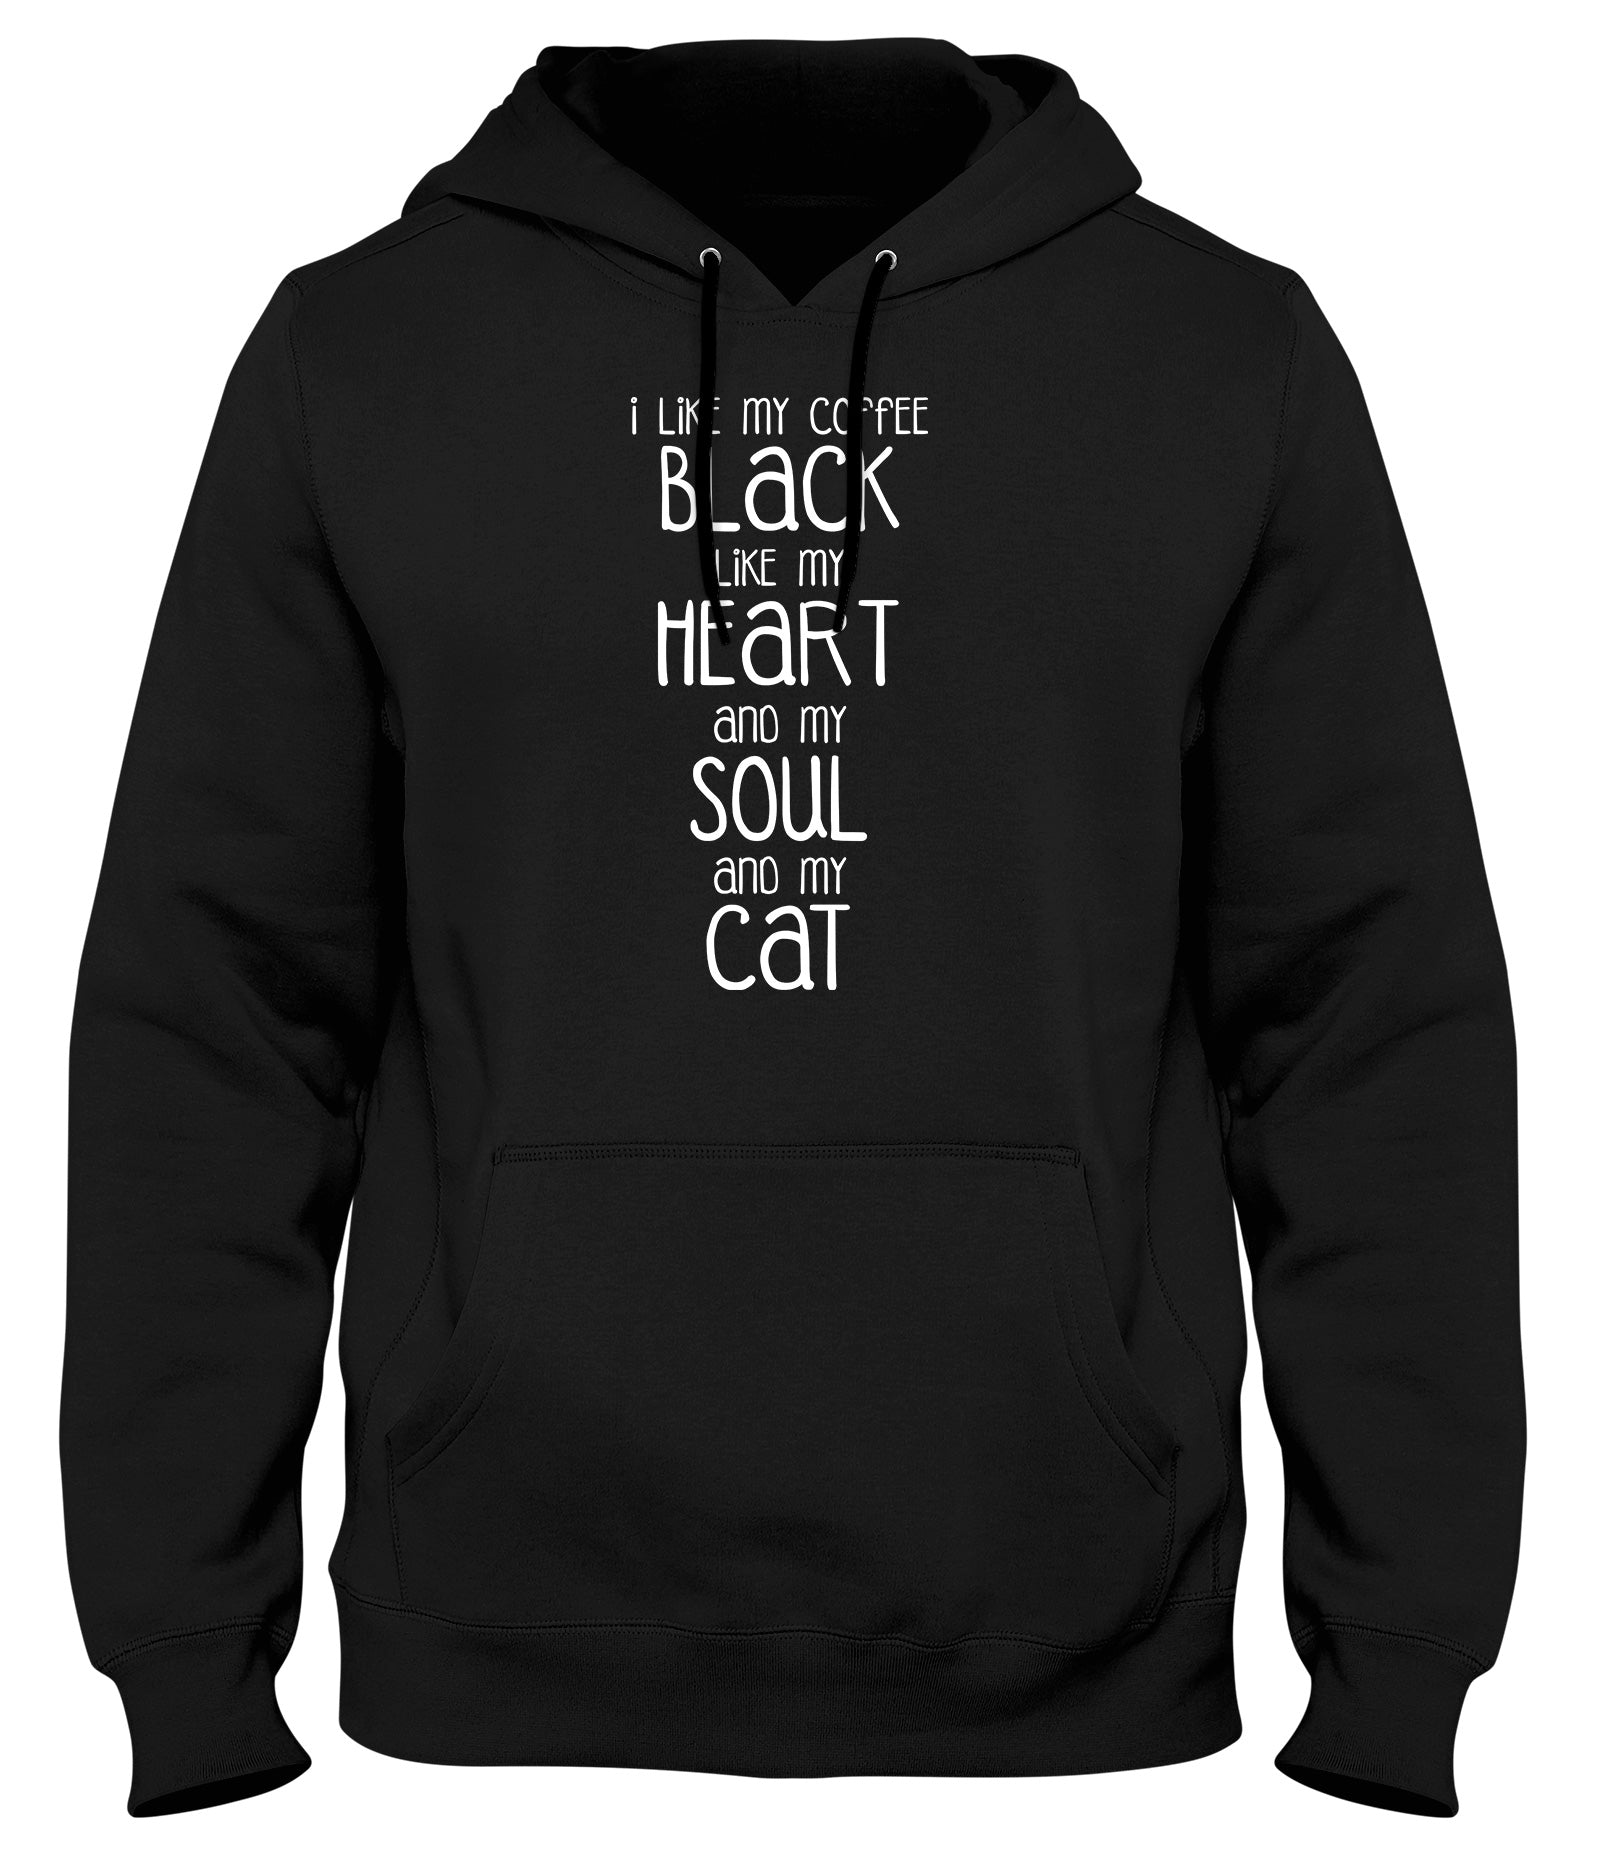 I LIKE MY COFFEE BLACK LIKE MY HEART AND MY SOUL AND MY CAT MENS LADIES WOMENS UNISEX HOODIE